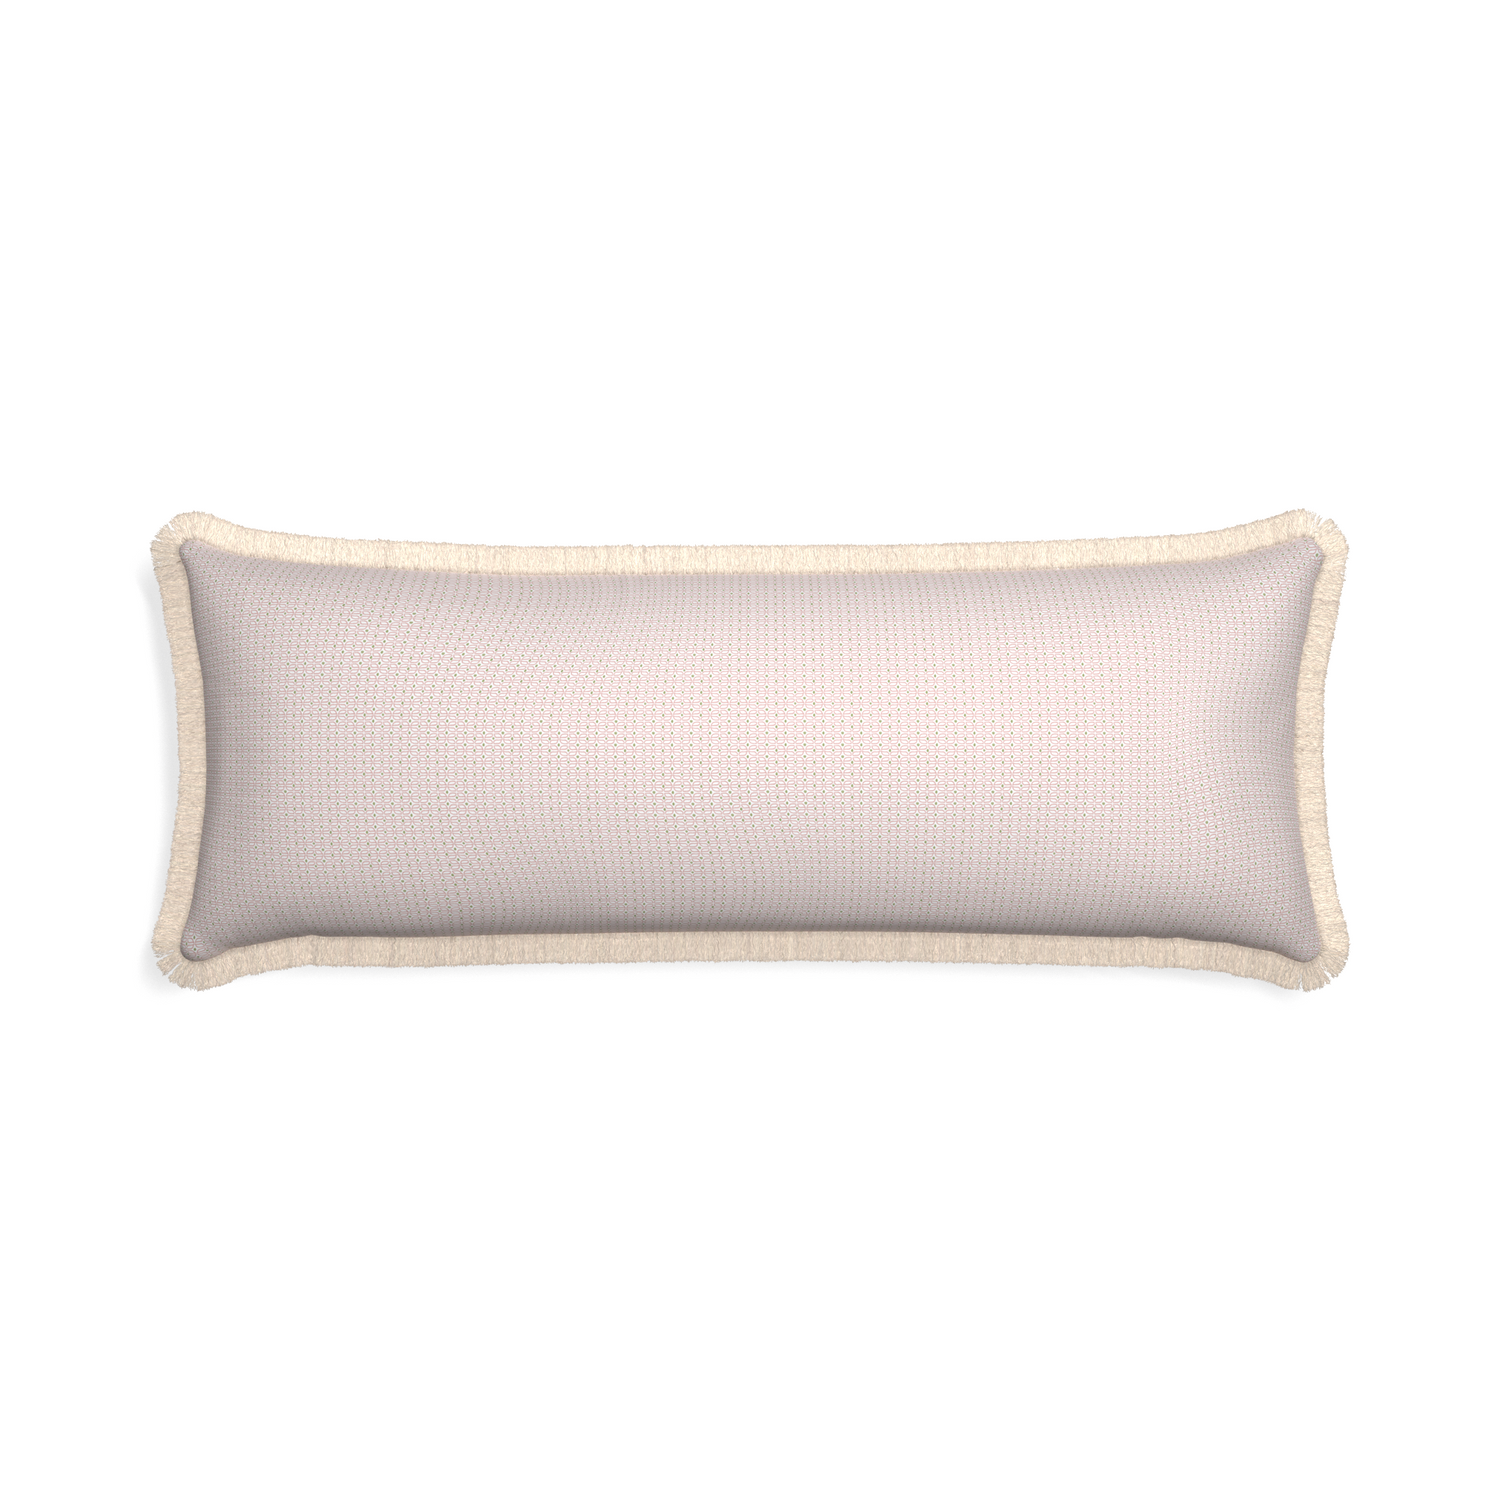 Xl-lumbar loomi pink custom pillow with cream fringe on white background